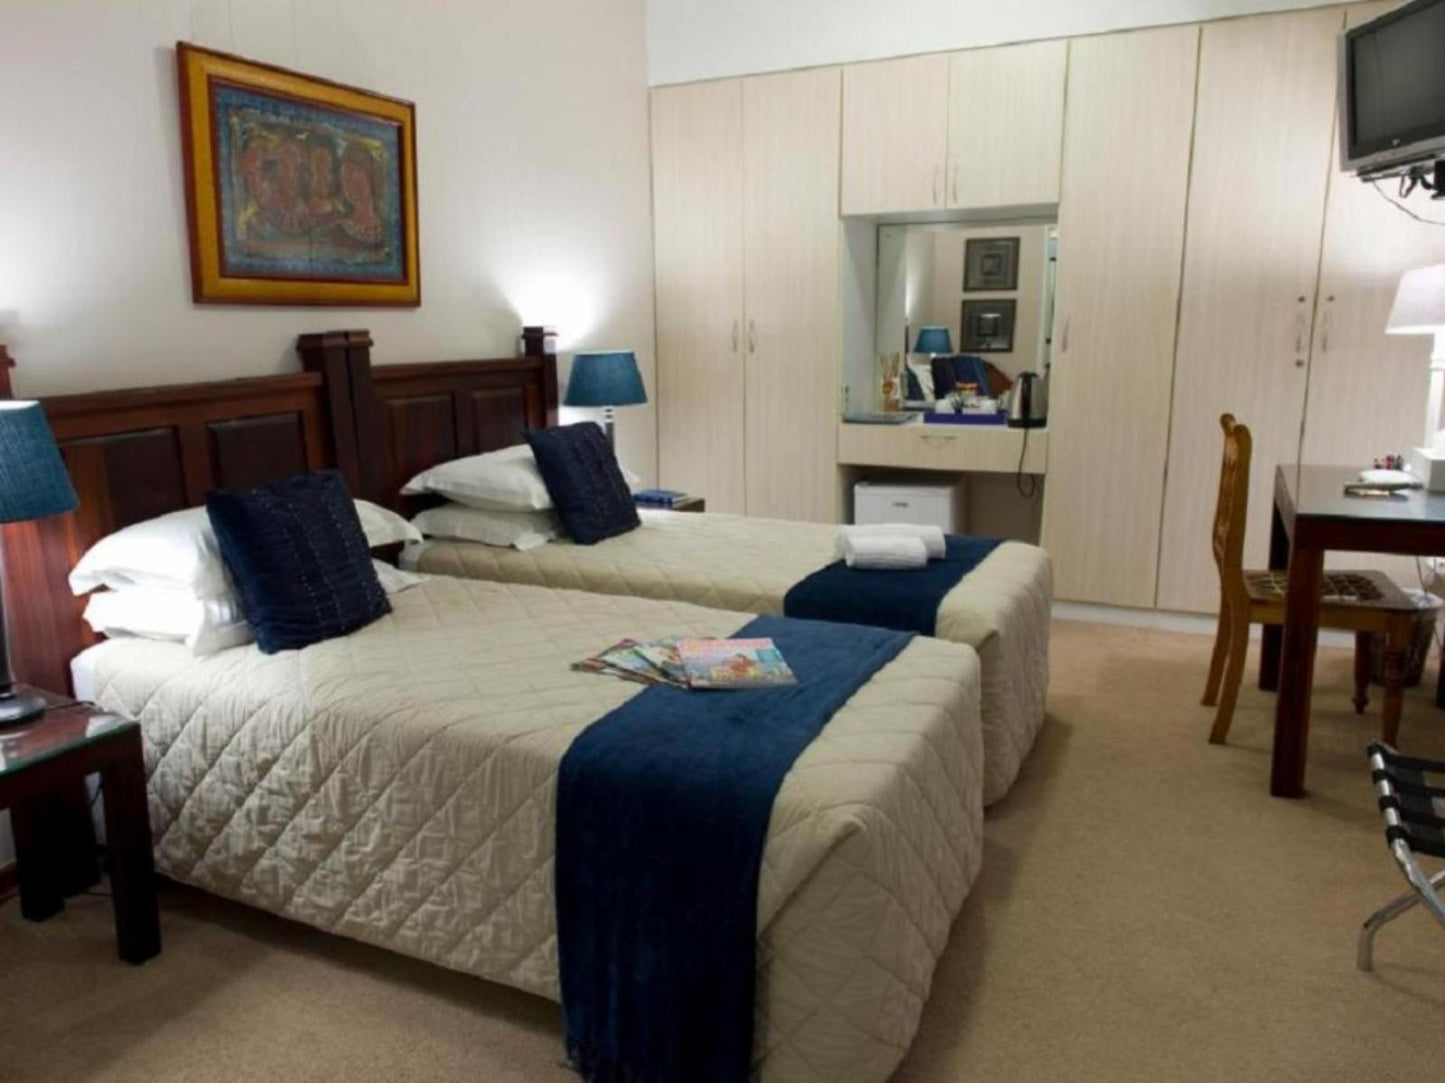 Standard Double Room twin bed @ De Witt'E Gastehuis